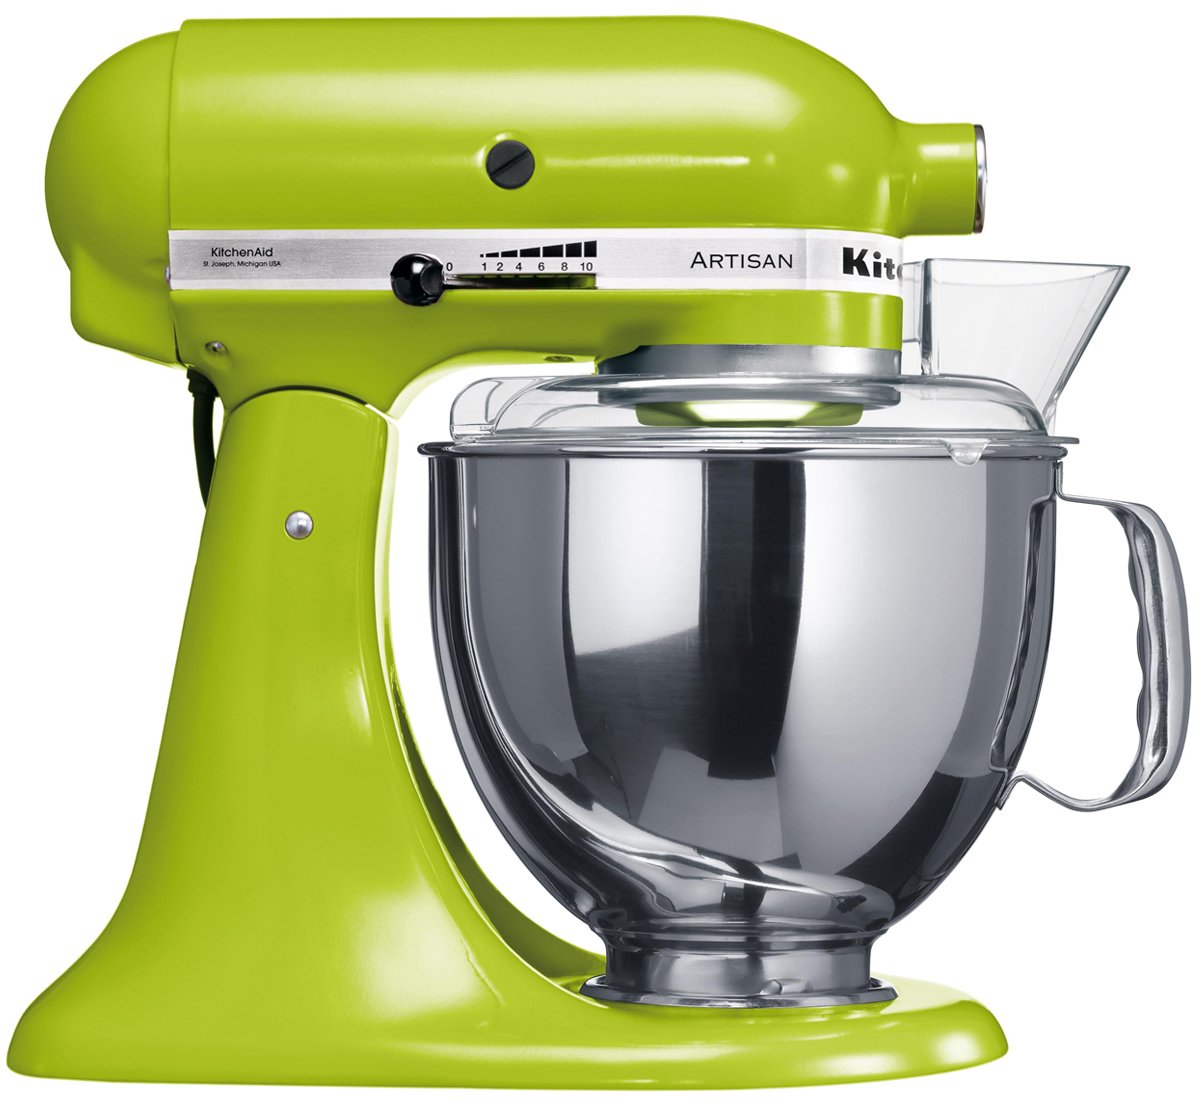 Kitchenaid 5ksm150psaga Artisan Stand Mixer Apple Green Appliances Online